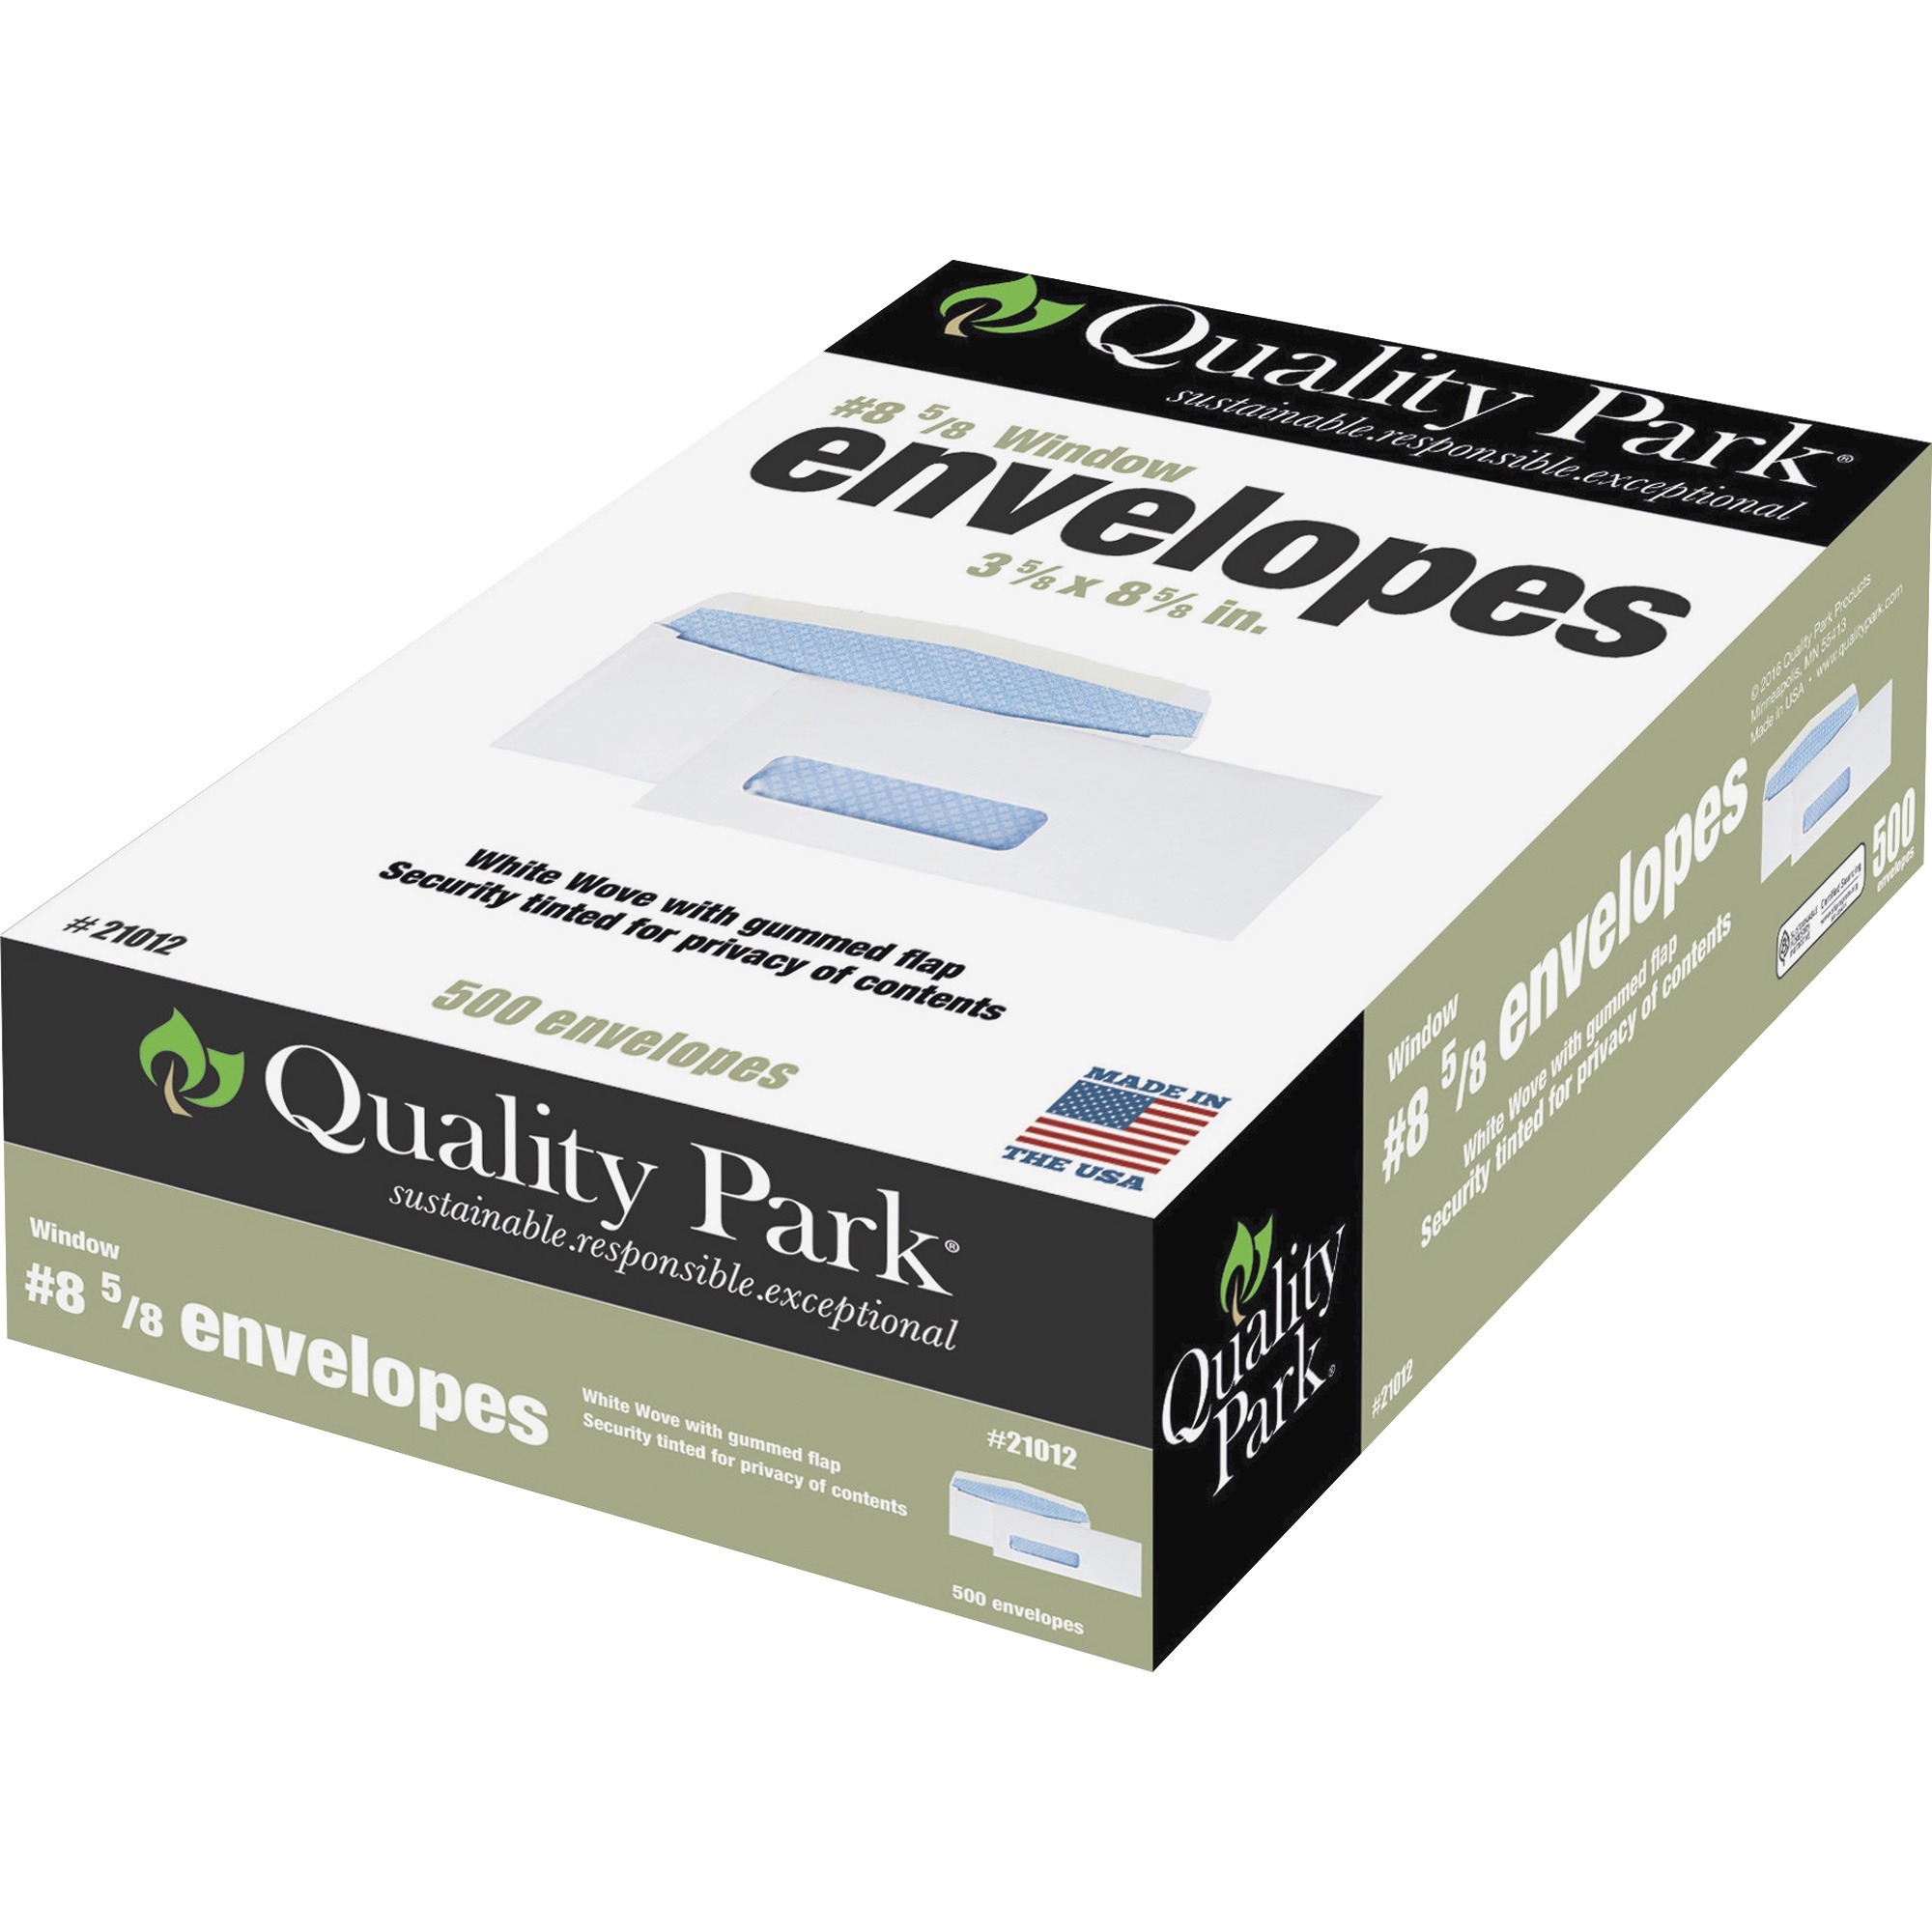 Quality Park Check Window Side Seam Tint Envelopes - Single Window - #8 5/8 - 3 5/8" Width x 8 5/8" Length - 24 lb - Gummed - Wo